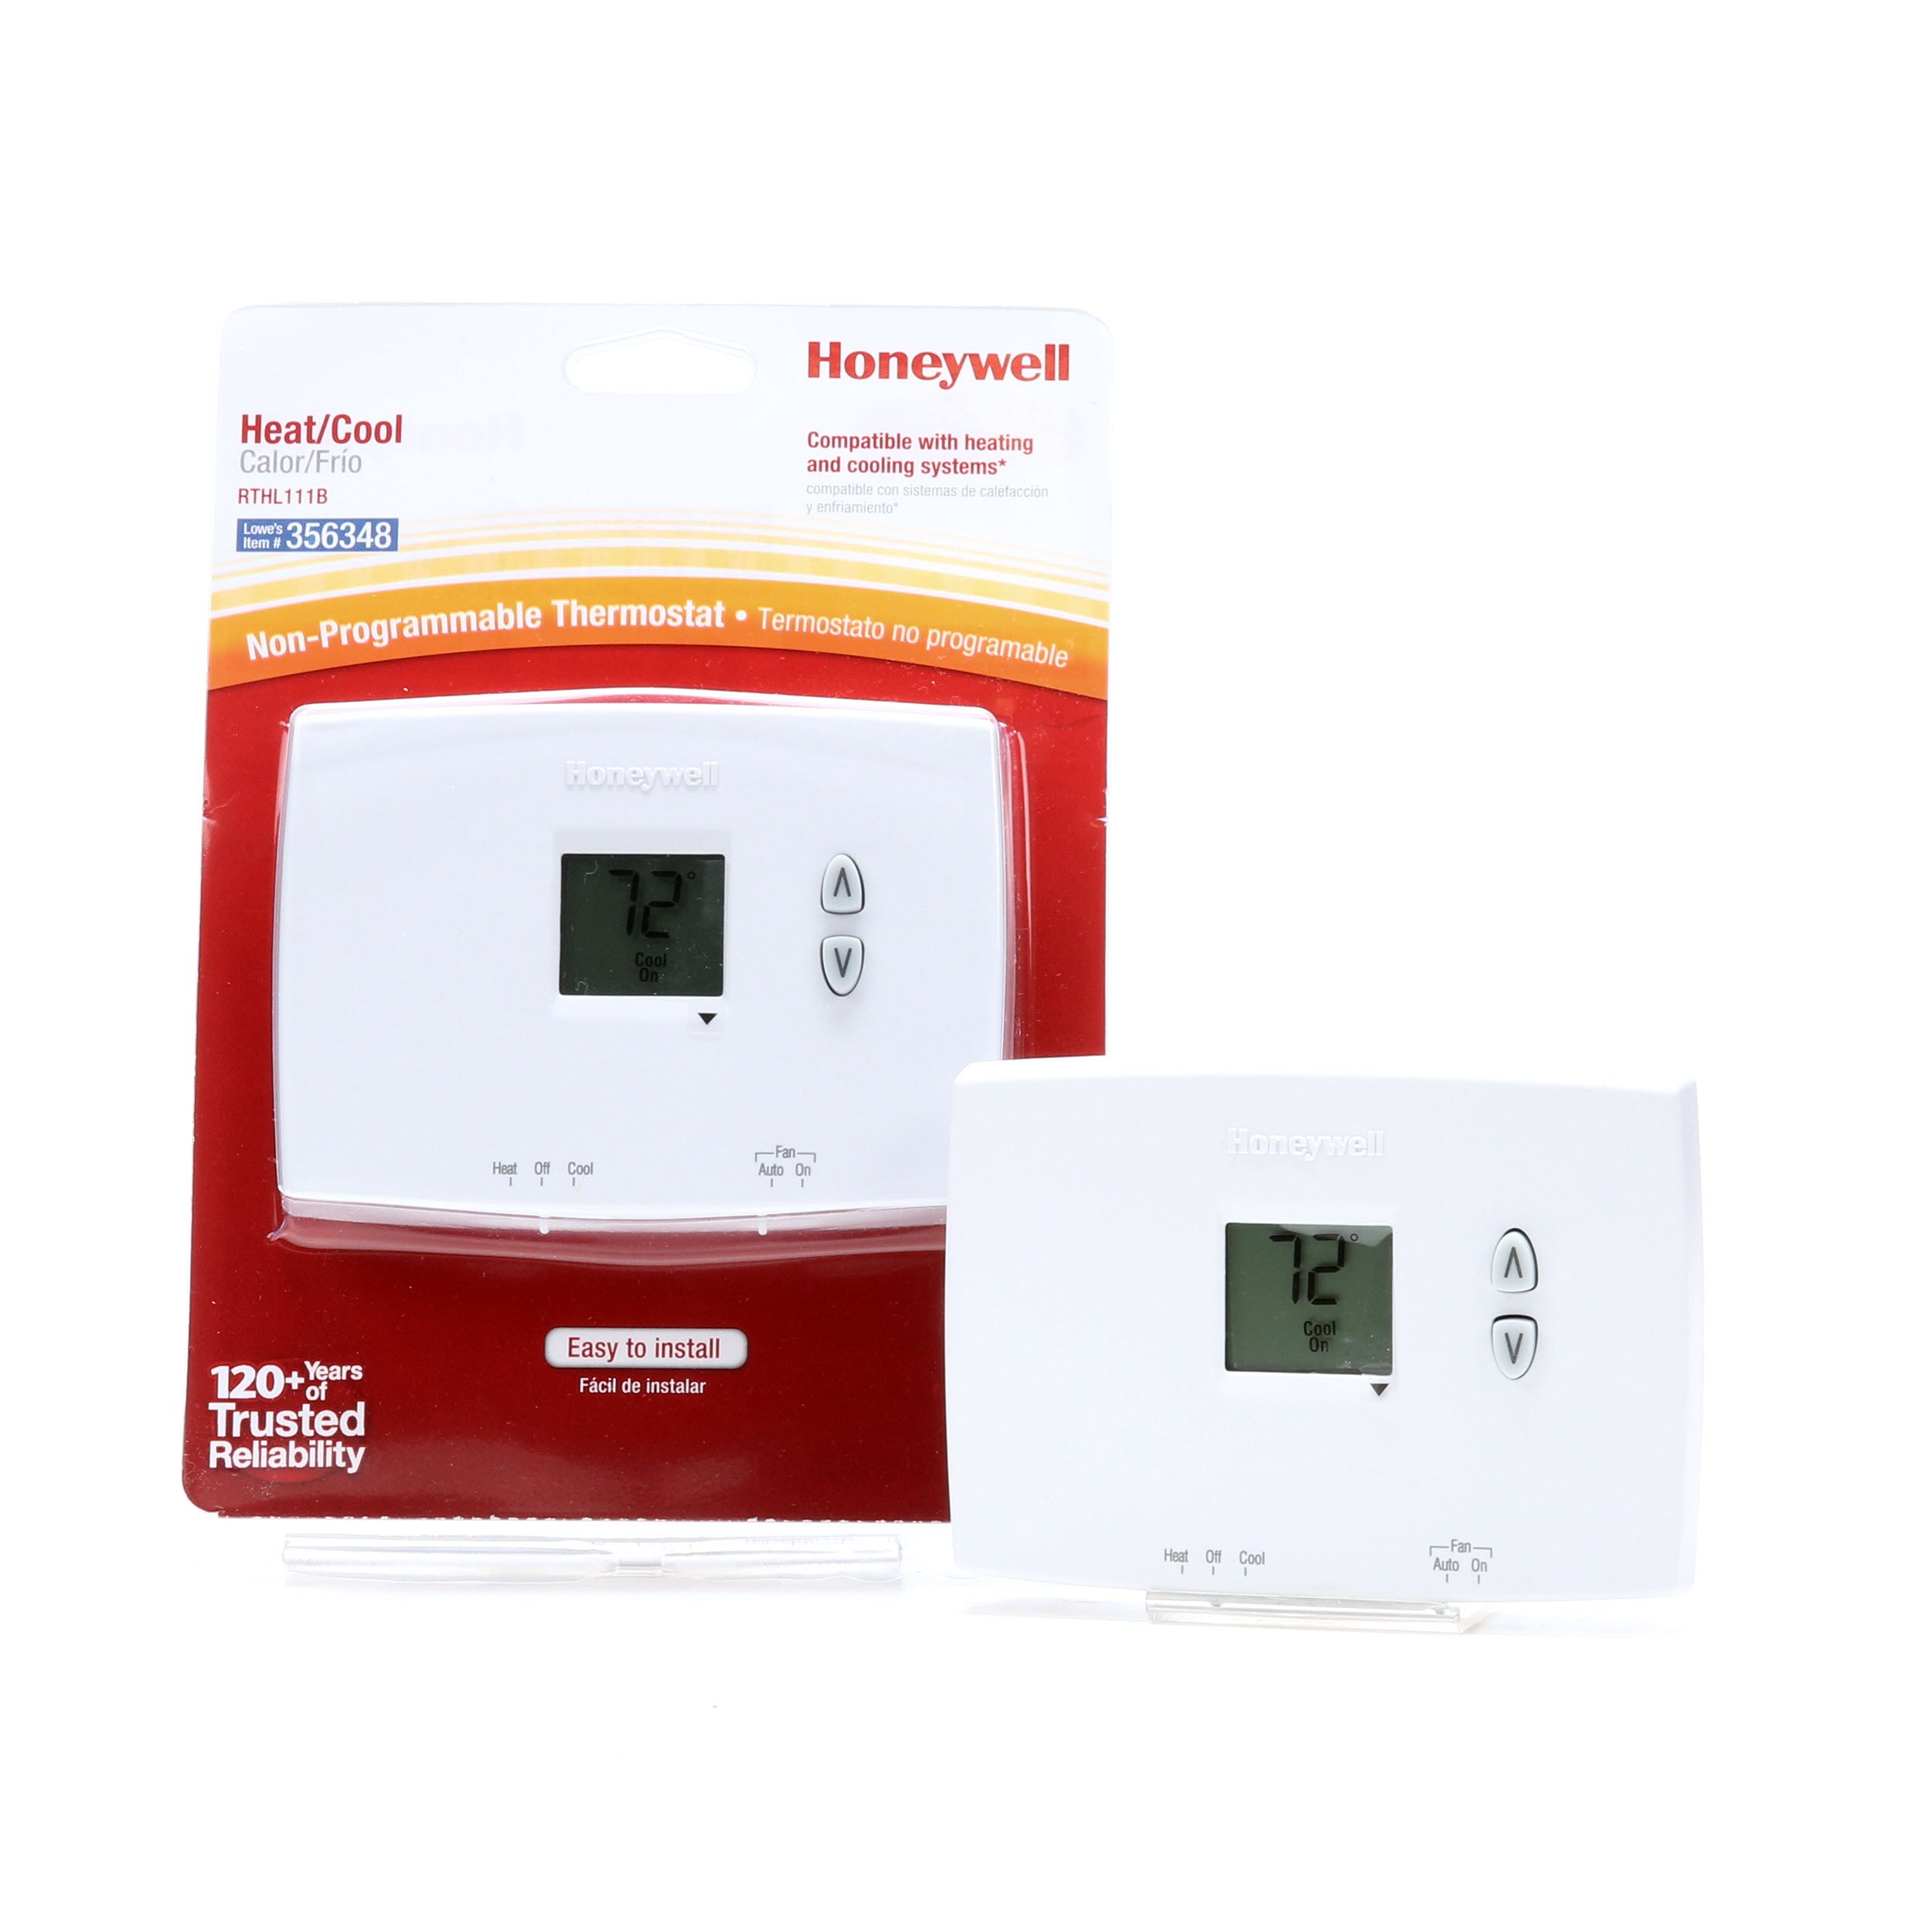 Honeywell RTH111B1016/E1 Digital Non-Programmable Thermostat 